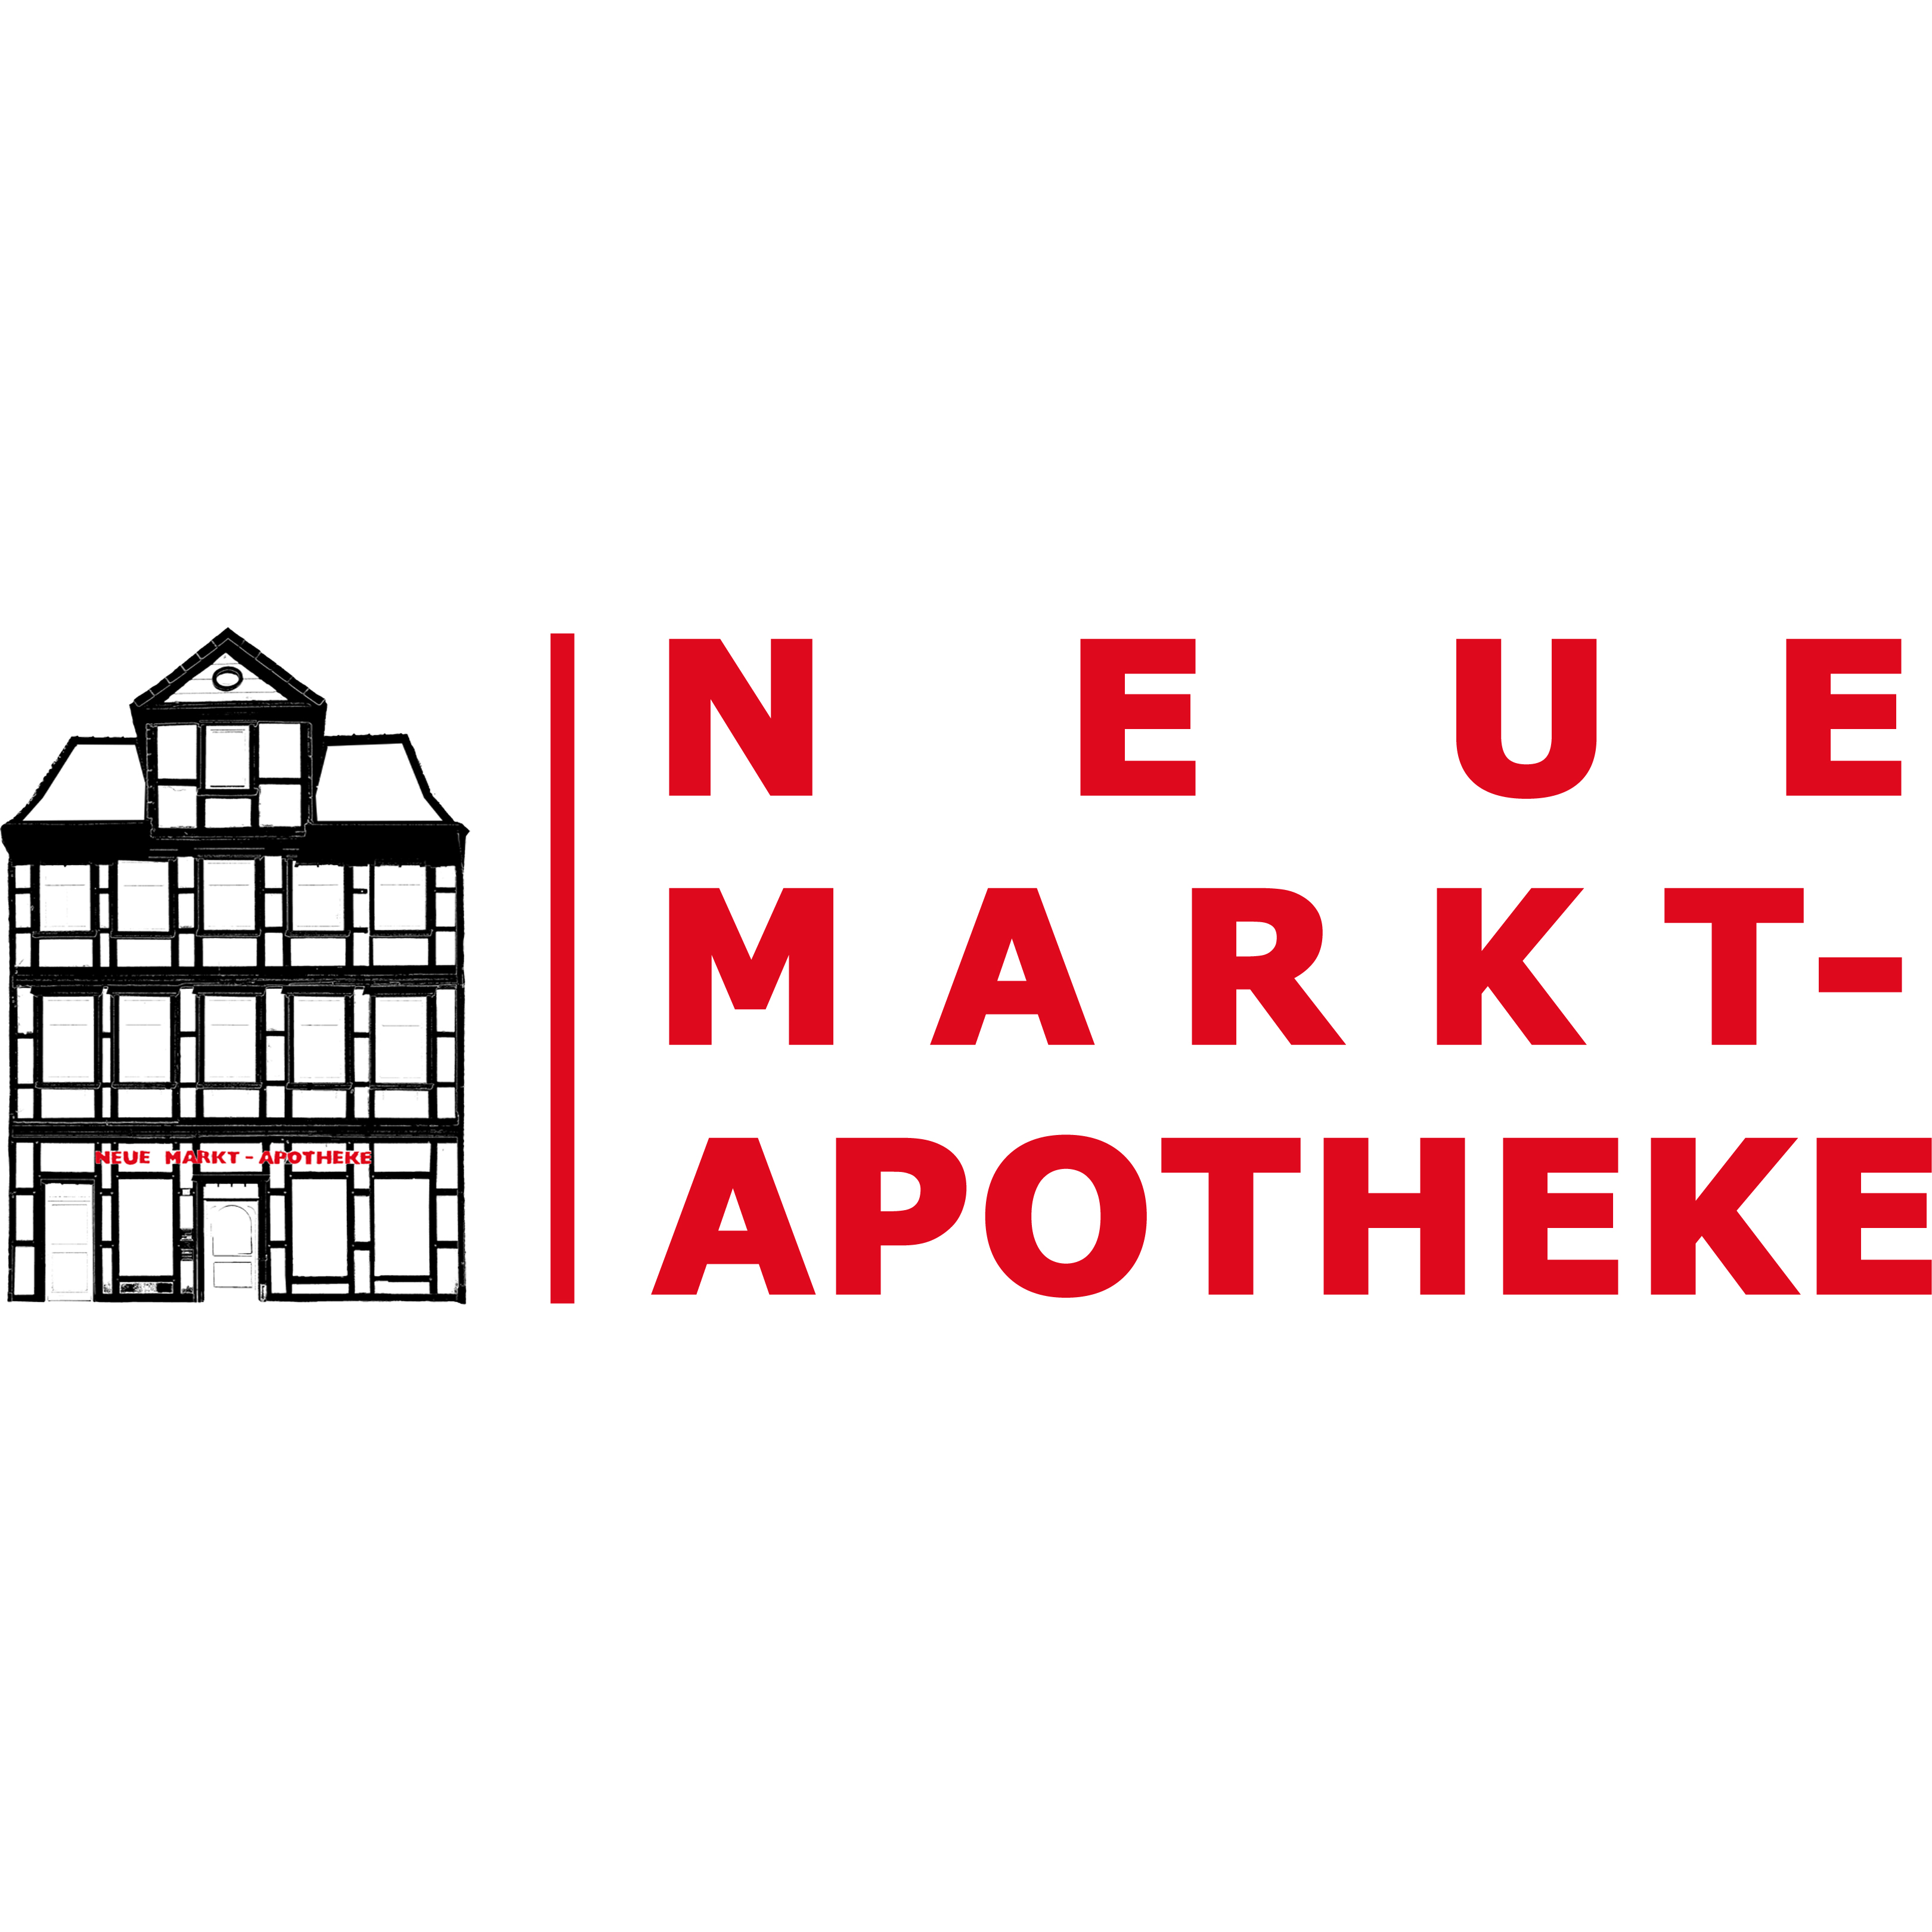 Neue Markt-Apotheke Logo